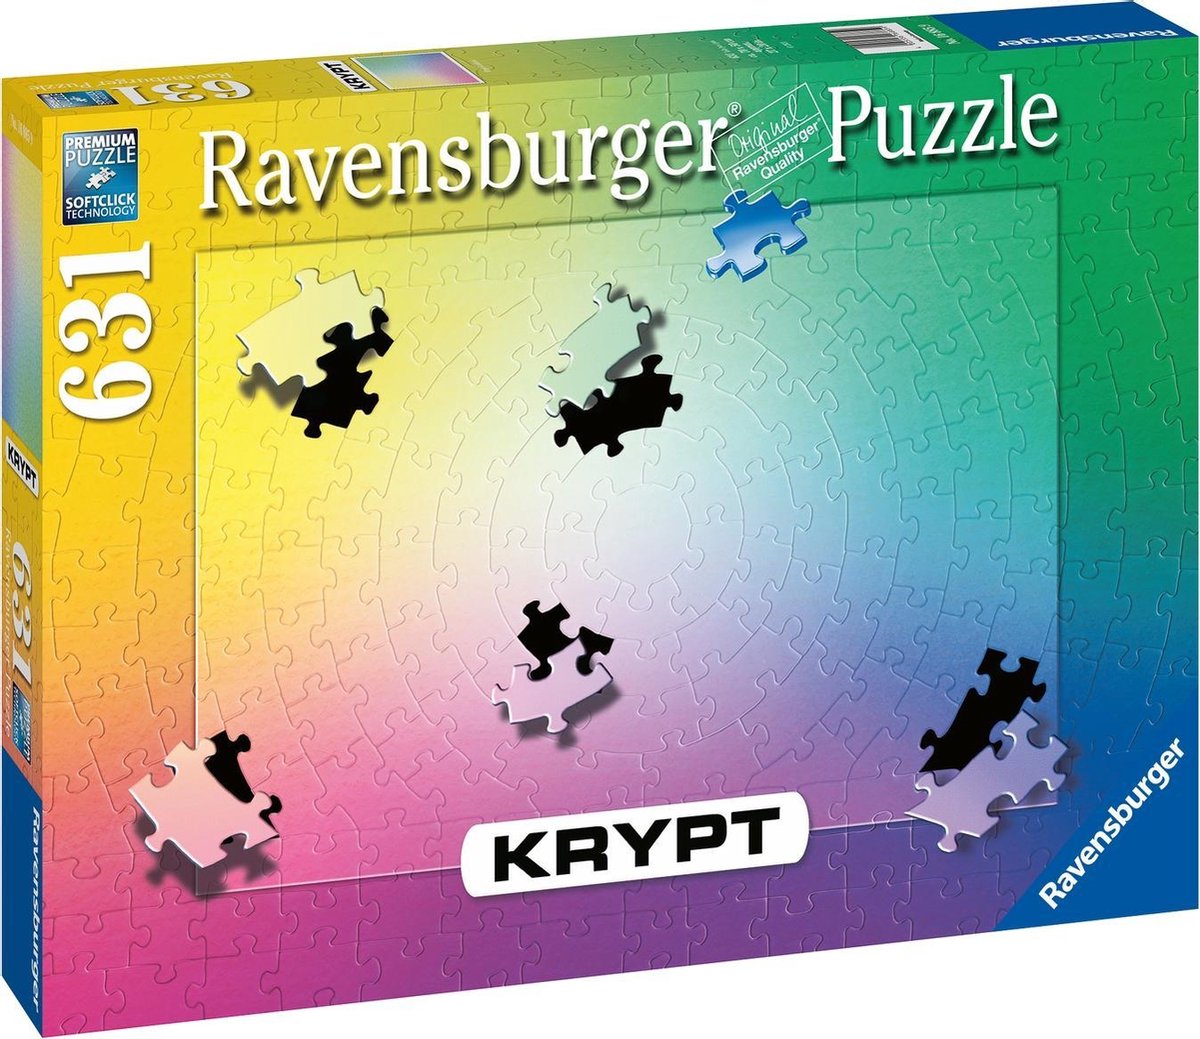 Ravensburger Krypt puzzel Gradient